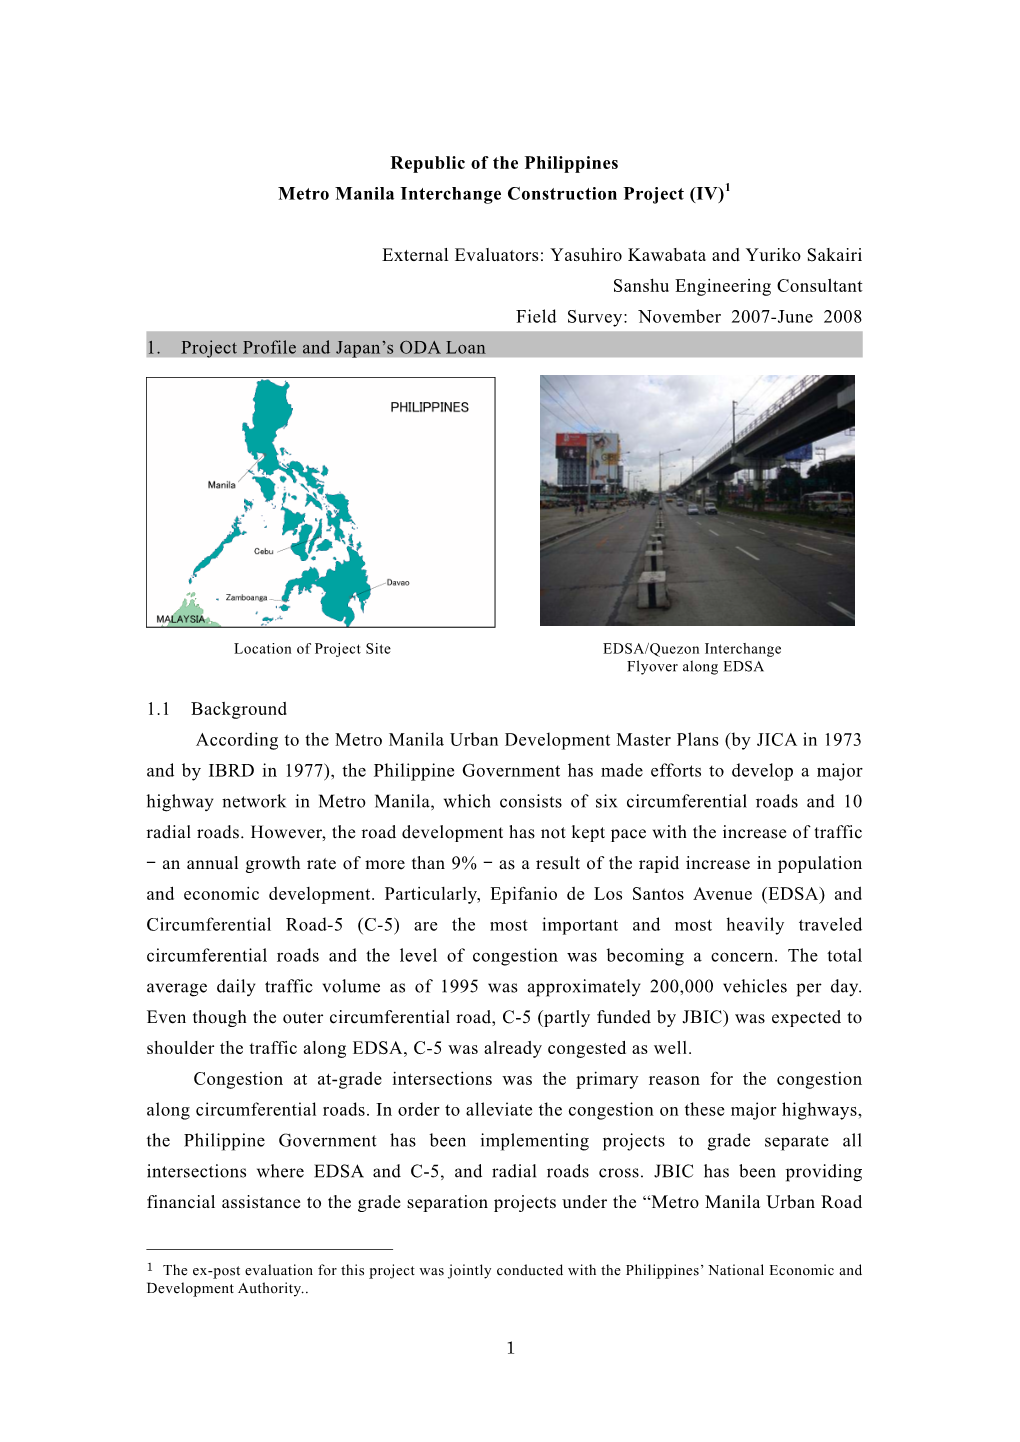 Republic of the Philippines Metro Manila Interchange Construction Project (IV)1